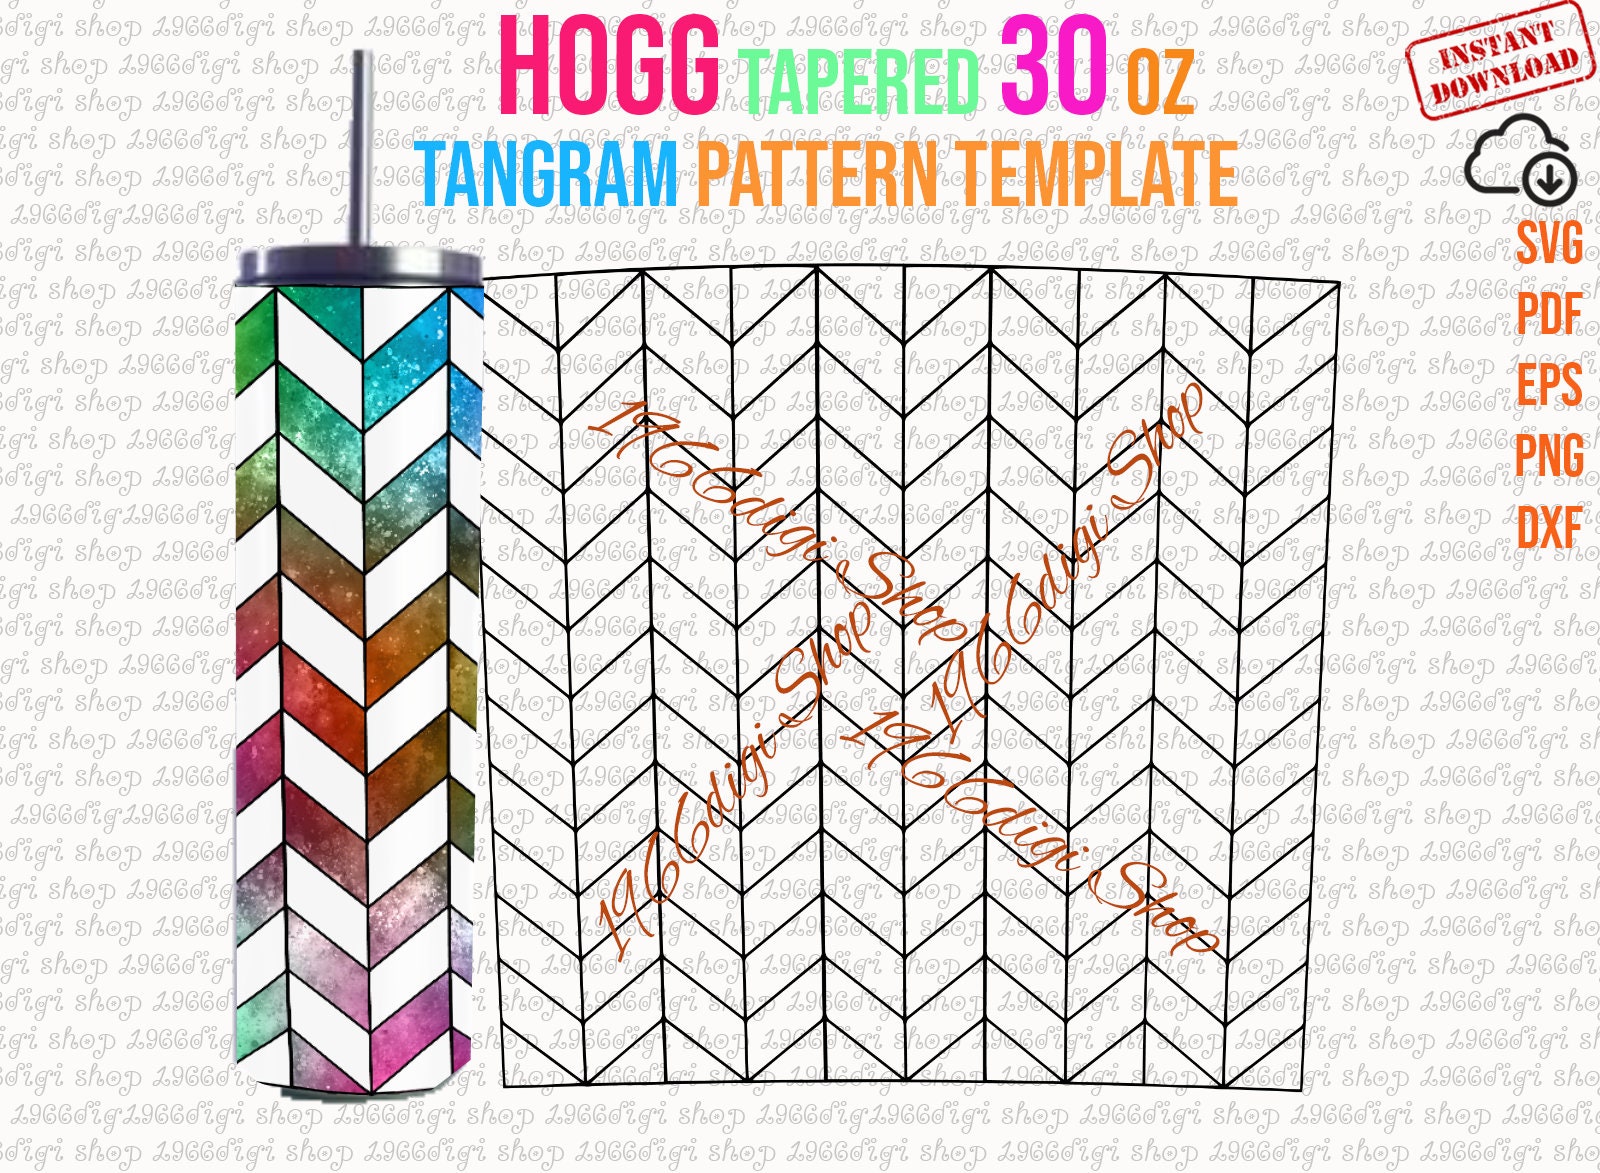 Tangram Tumbler Template 30 oz Hogg Skinny Svg tapered Pattern Template 30 oz Hogg Skinny Tumbler cut file Hogg tumbler Template 30 OZ